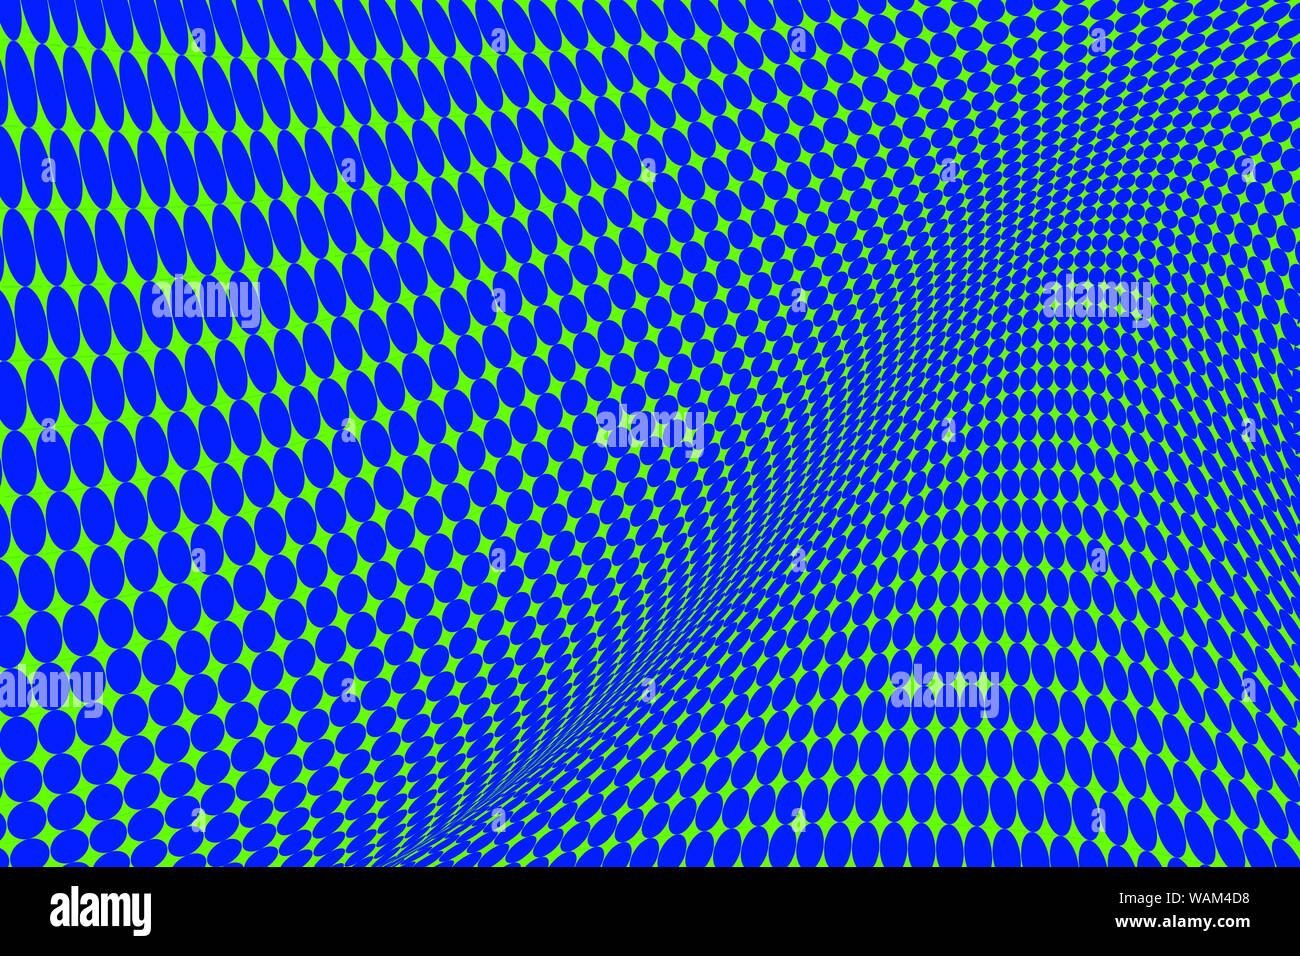 Illusion farbenfrohes Design 6000 x 4000 Pixel 16 Bit hochwertige Drucke fine art Home Decor Stockfoto